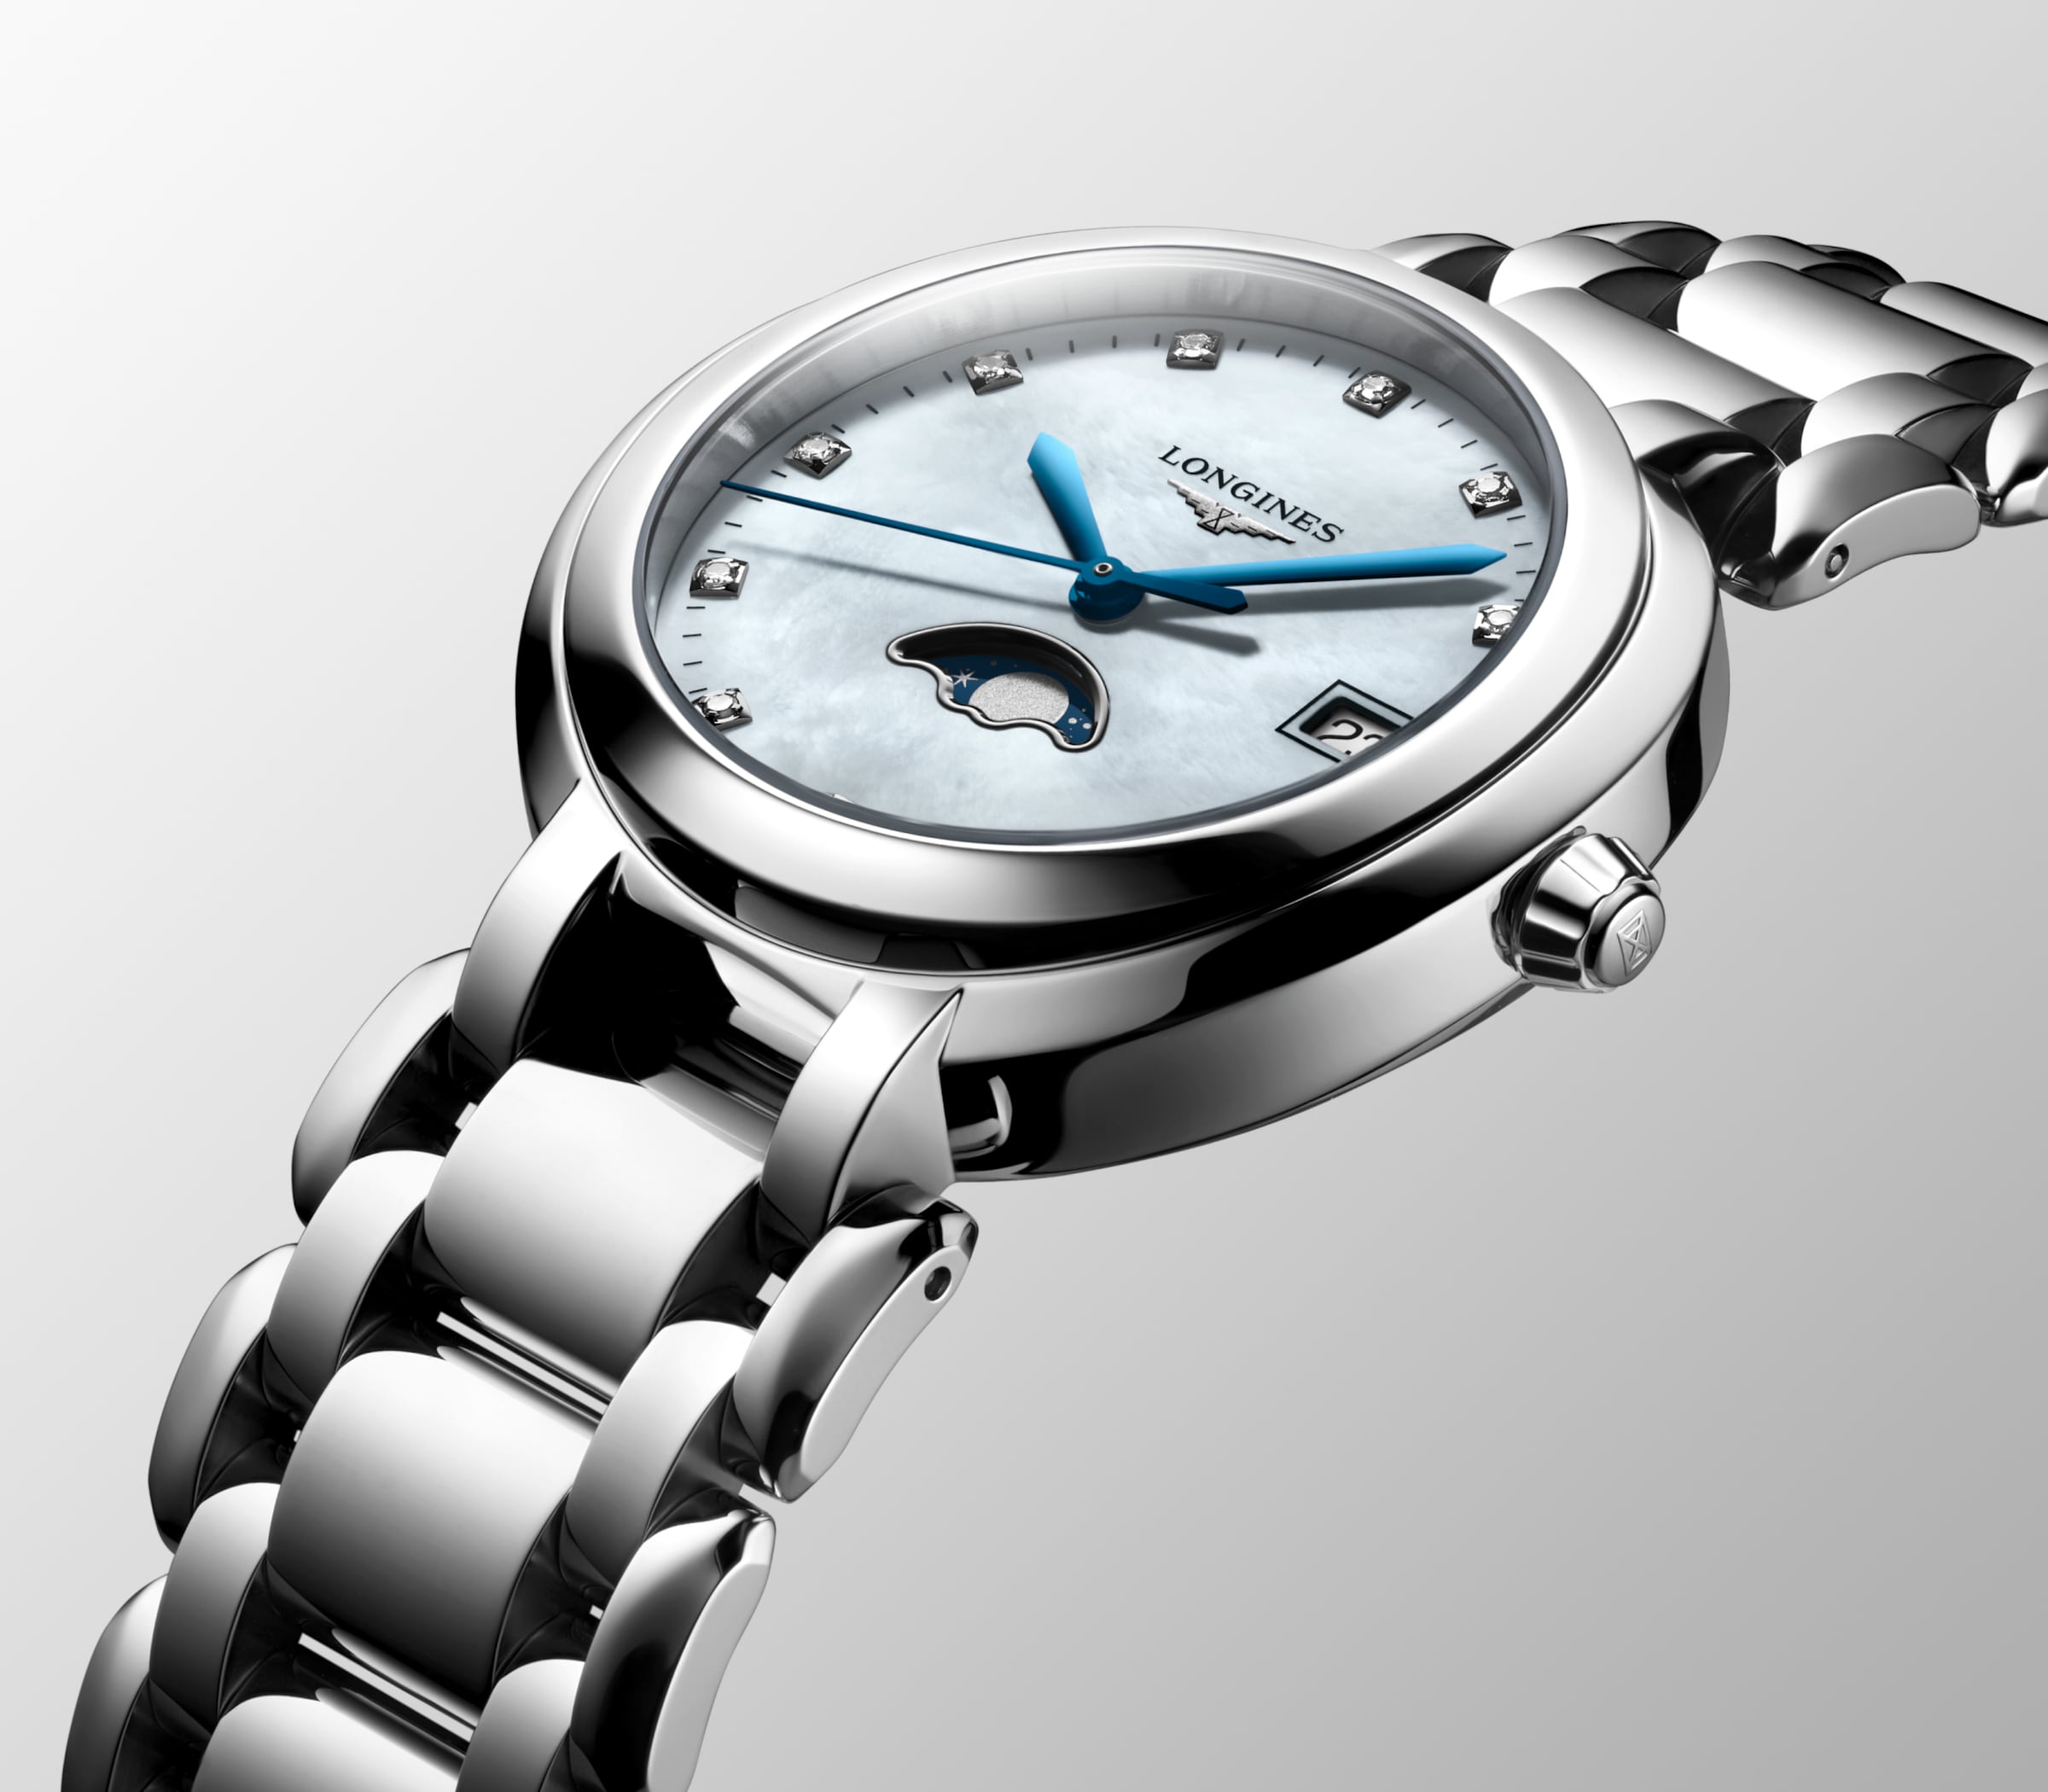 Longines PRIMALUNA Quartz Stainless steel Watch - L8.116.4.87.6